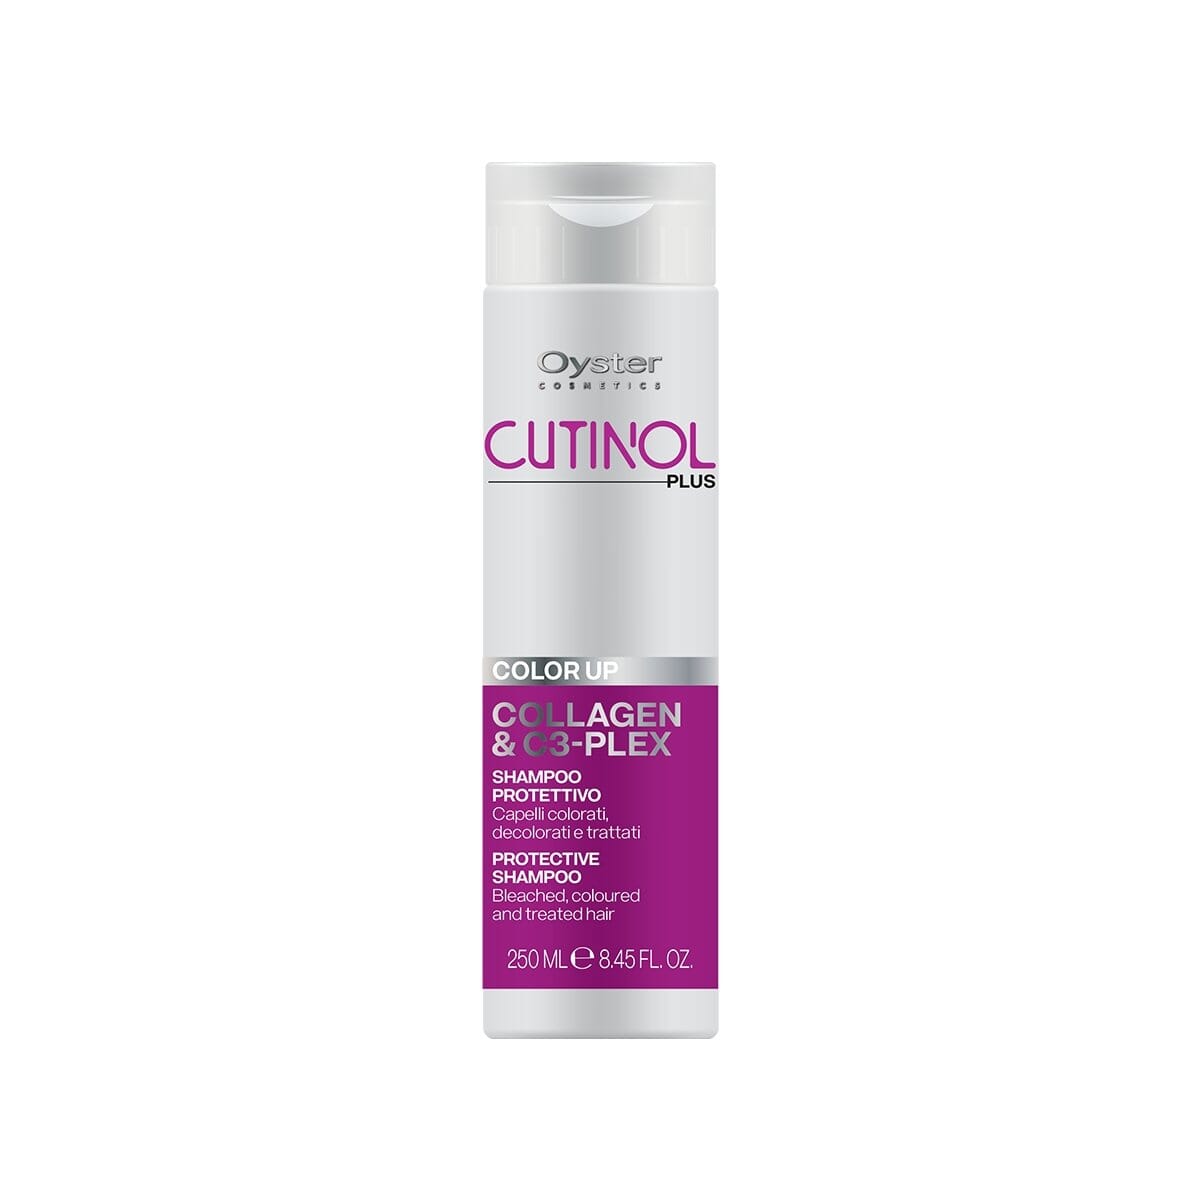 Color Up Protective Shampoo | Collagen & C3-Plex | Cutinol Plus | OYSTER HAIR CARE OYSTER 8.45 fl.oz. 